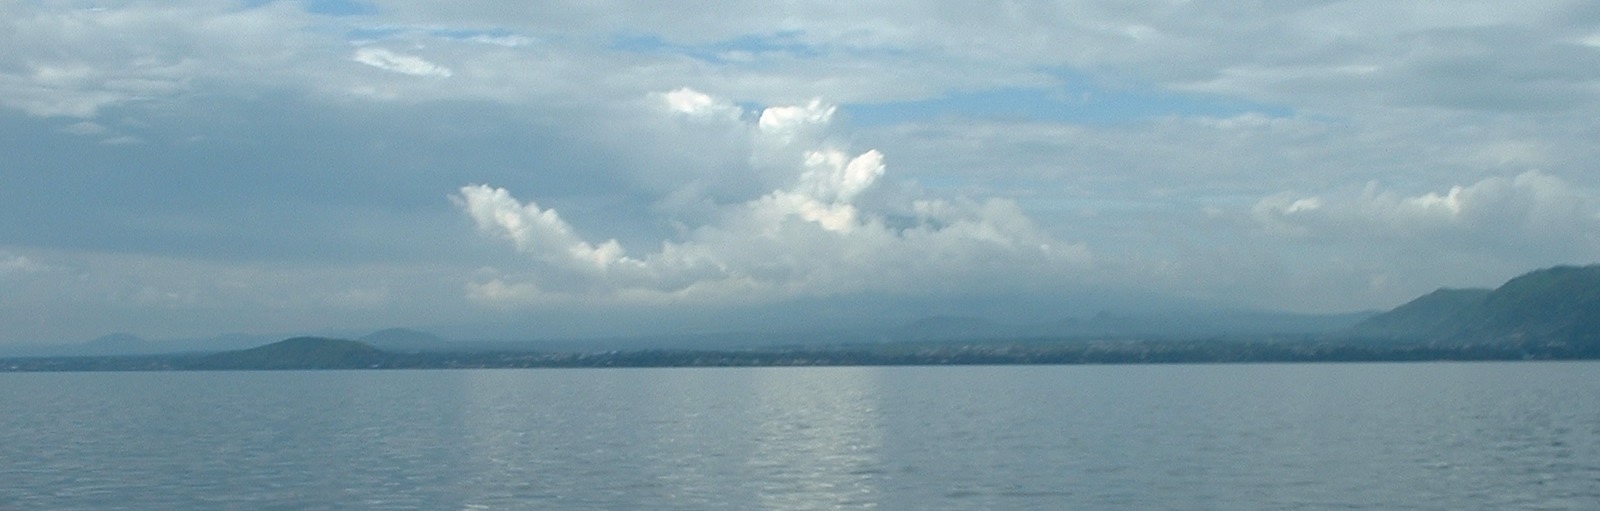 Hydragas Sway Presentation on Lake Kivu